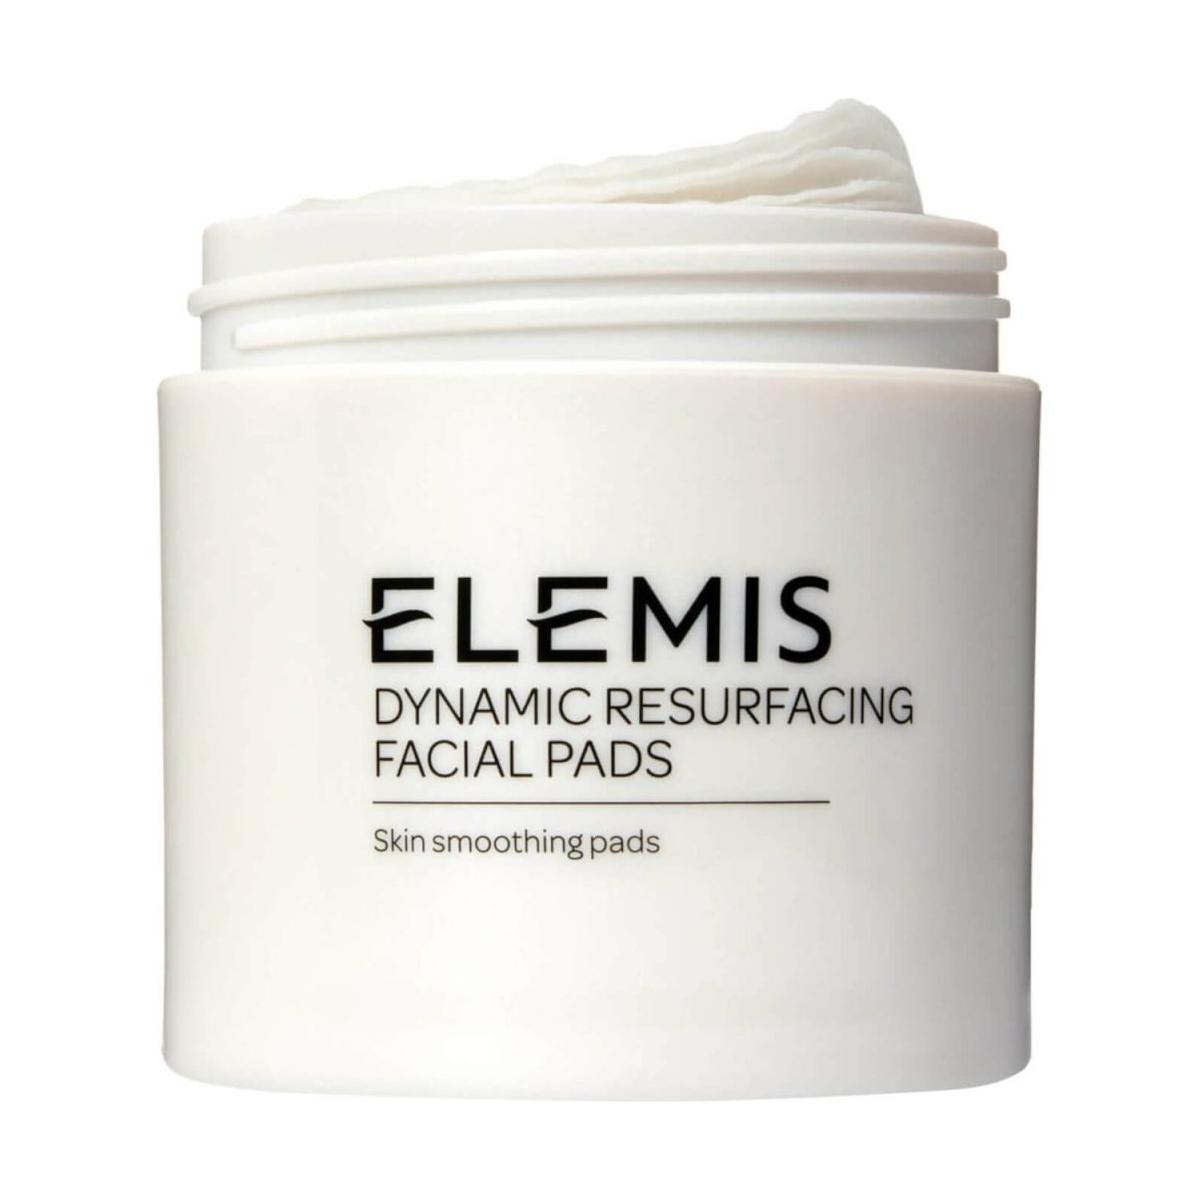 Elemis Dynamic Resurfacing Facial Pads 60 Ct - DG International Ventures Limited